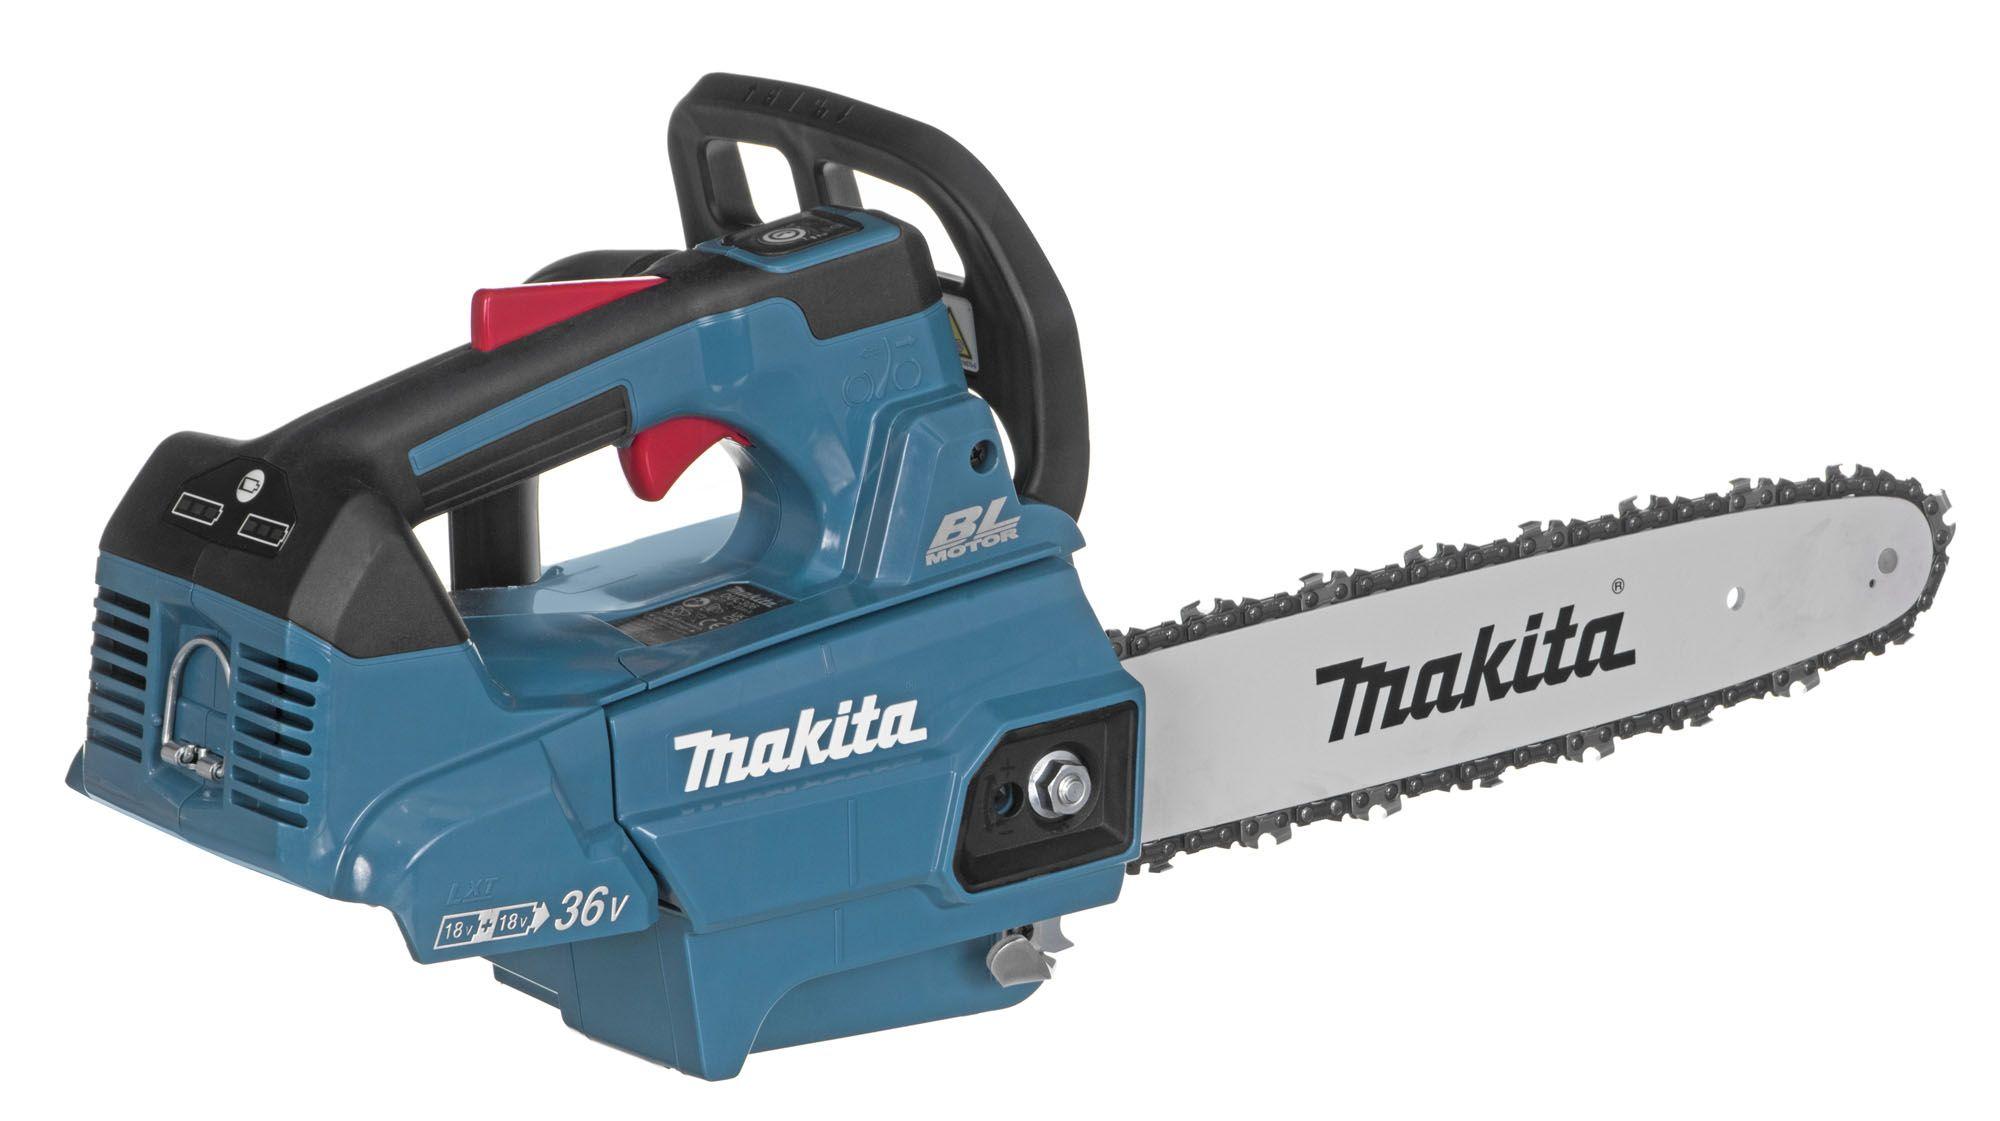 Makita DUC306ZB chainsaw Black, Blue